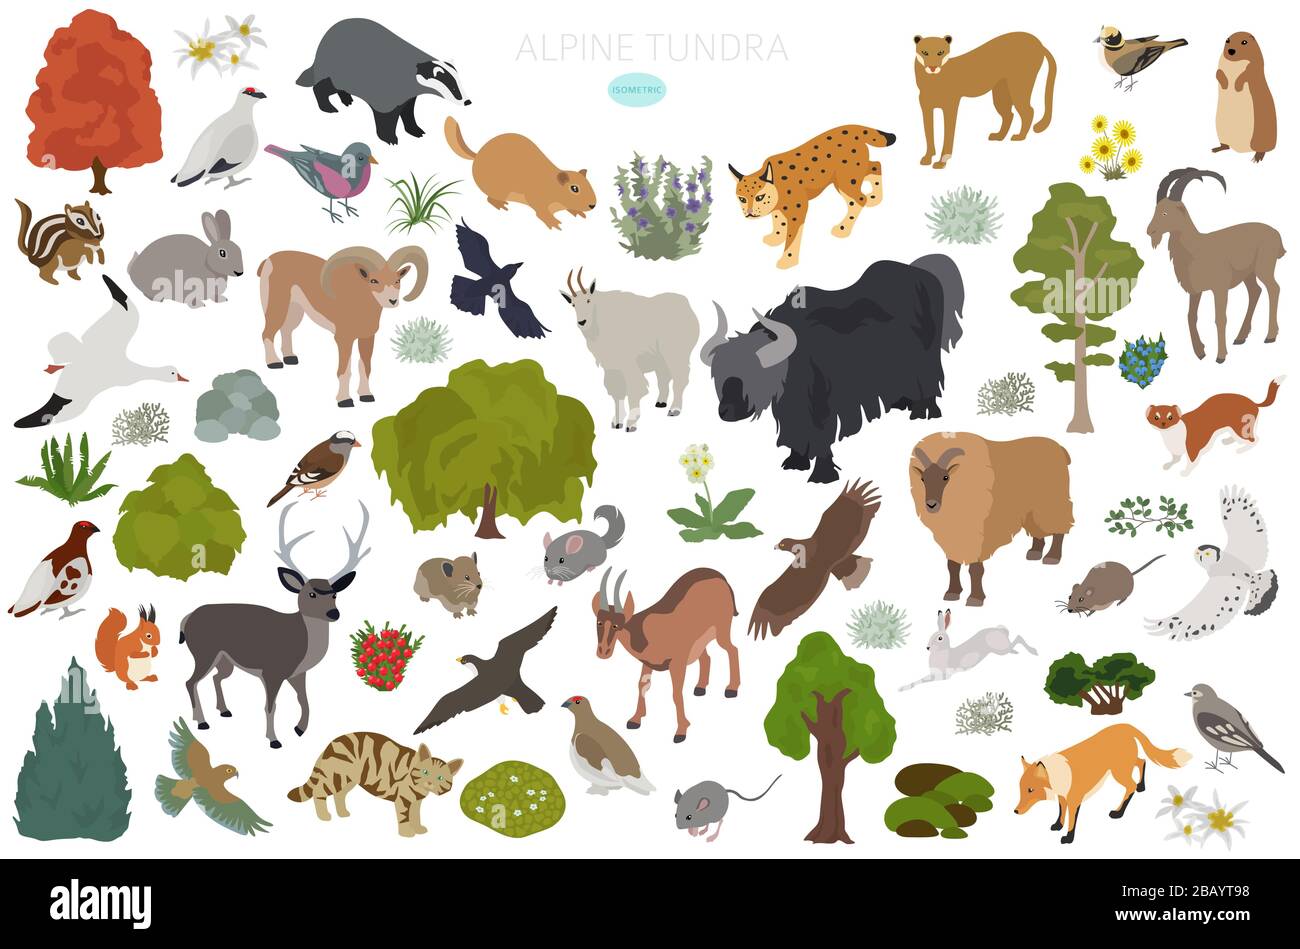 Apine tundra biome, natural region isometric infographic. Terrestrial ecosystem world map. Animals, birds and plants design set. Vector illustration Stock Vector